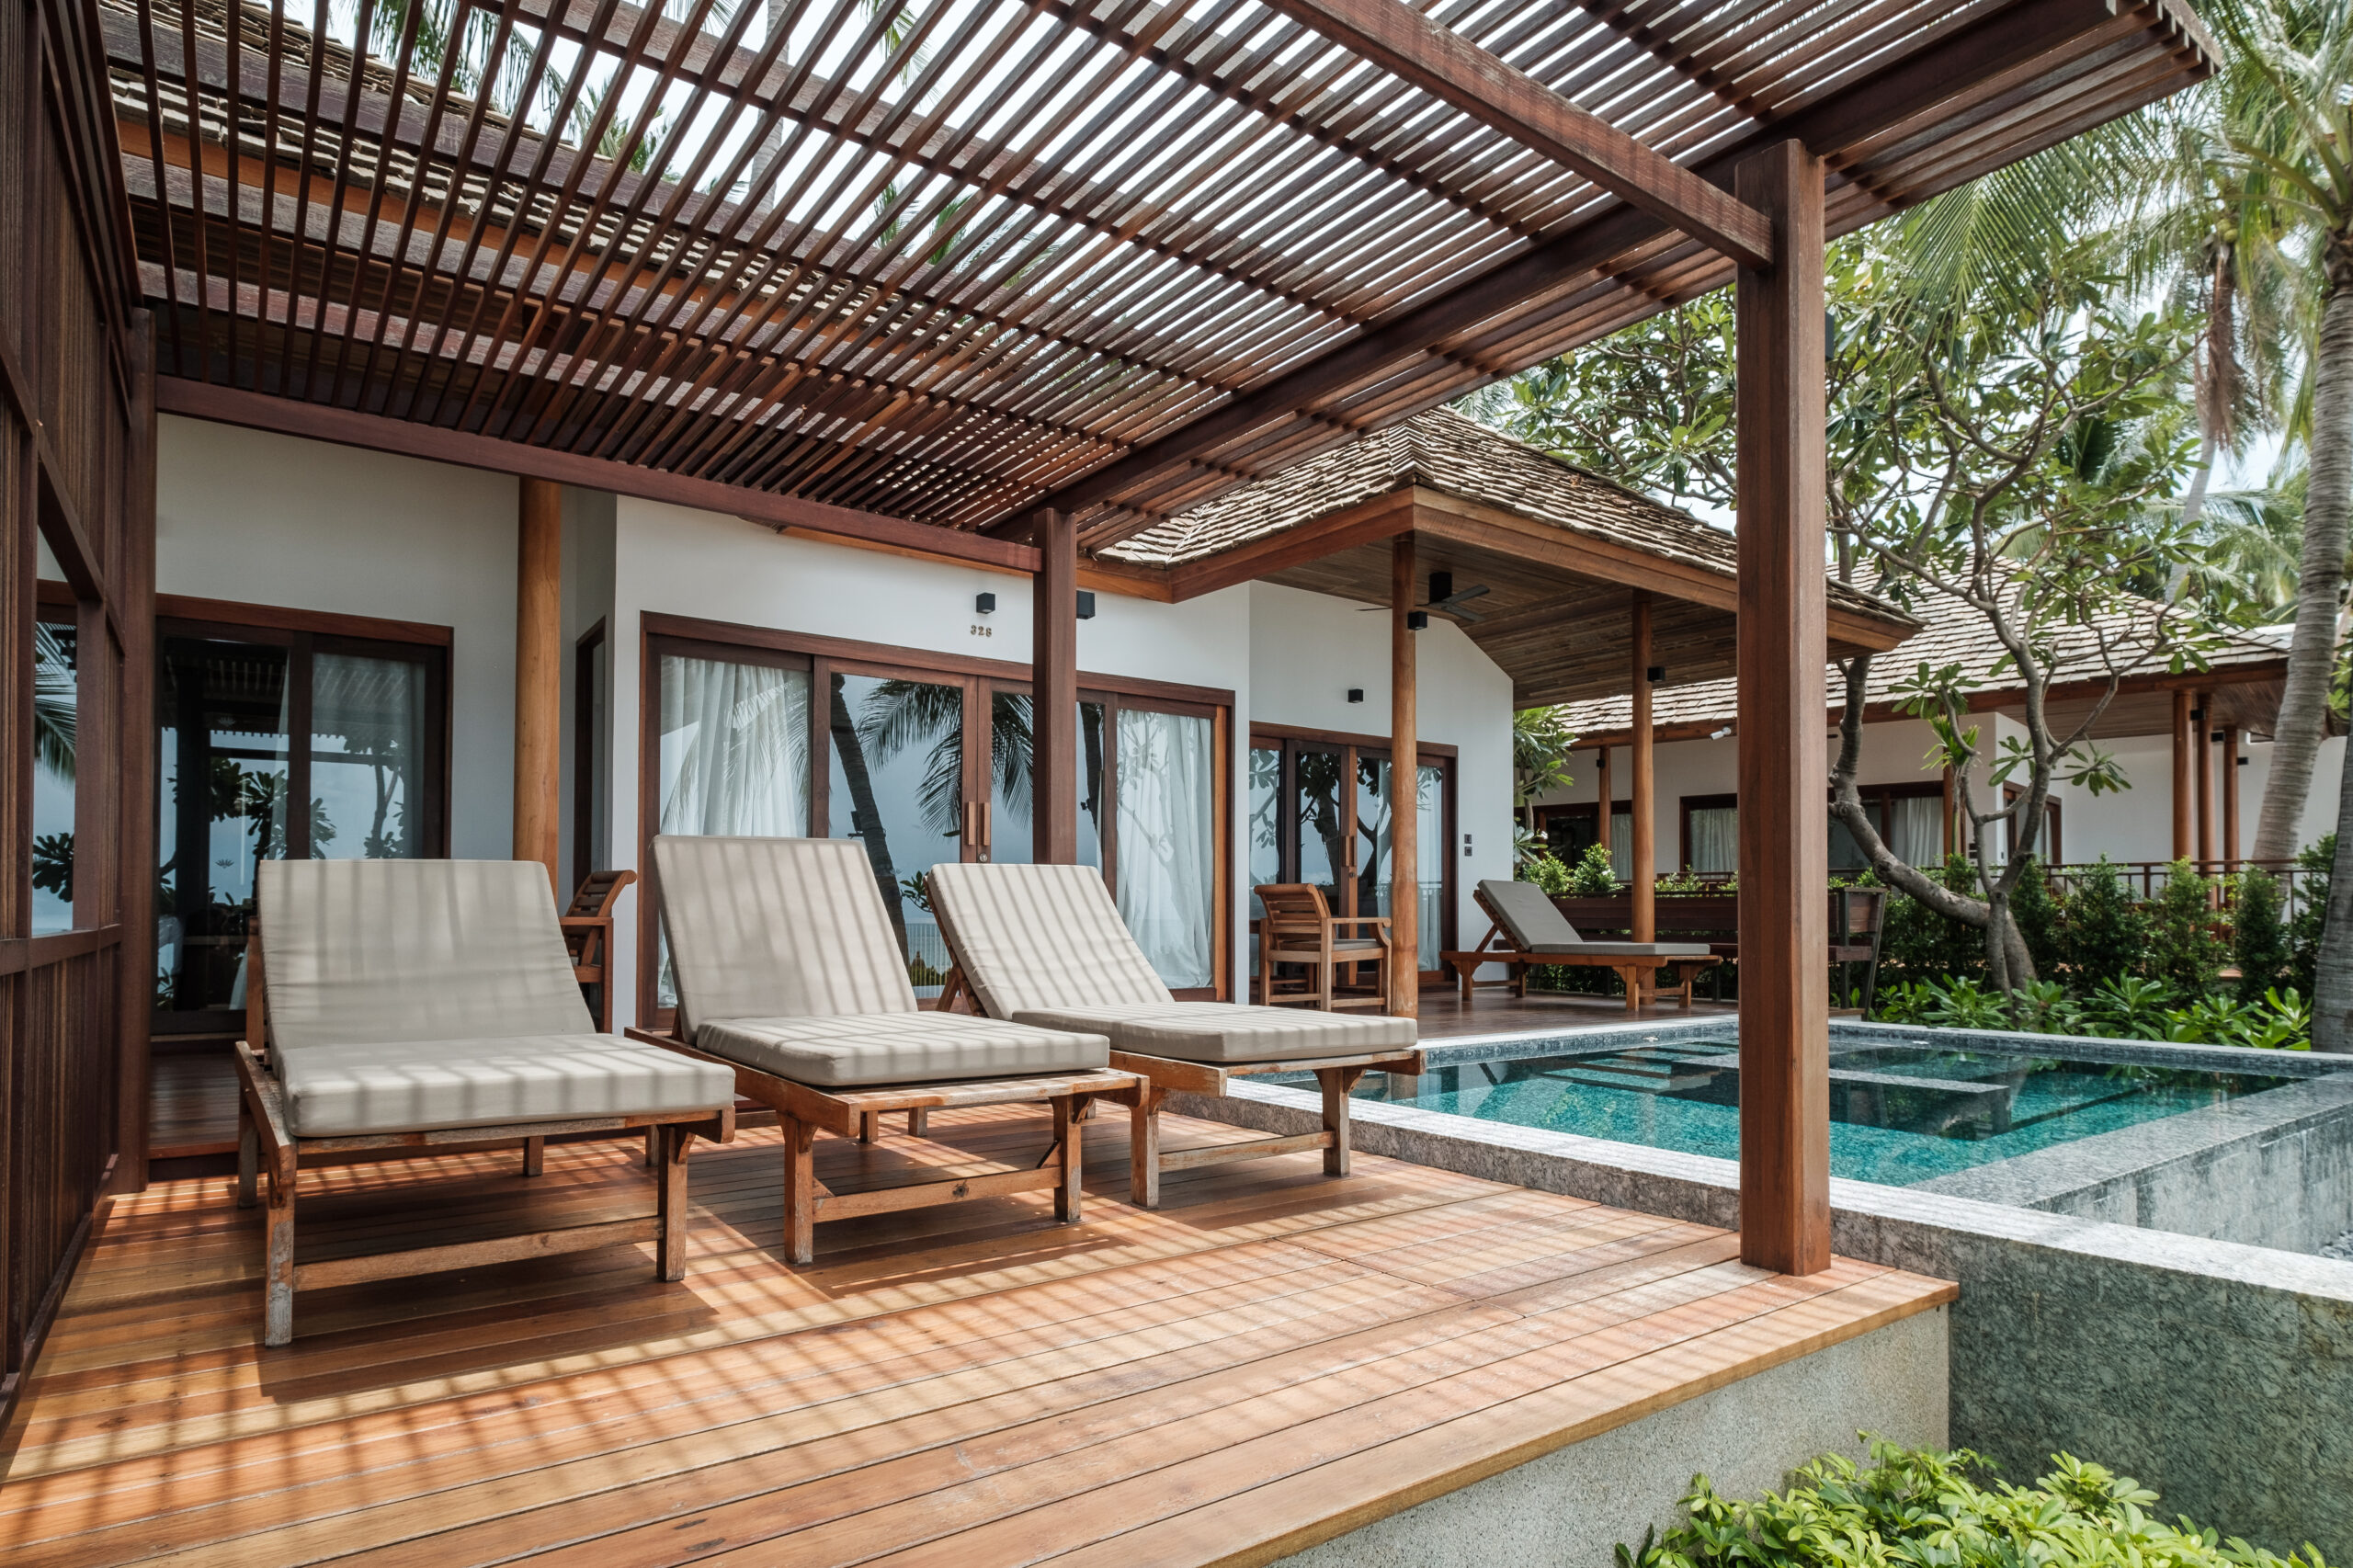 Beachfront villa, 2 bedroom with private pool